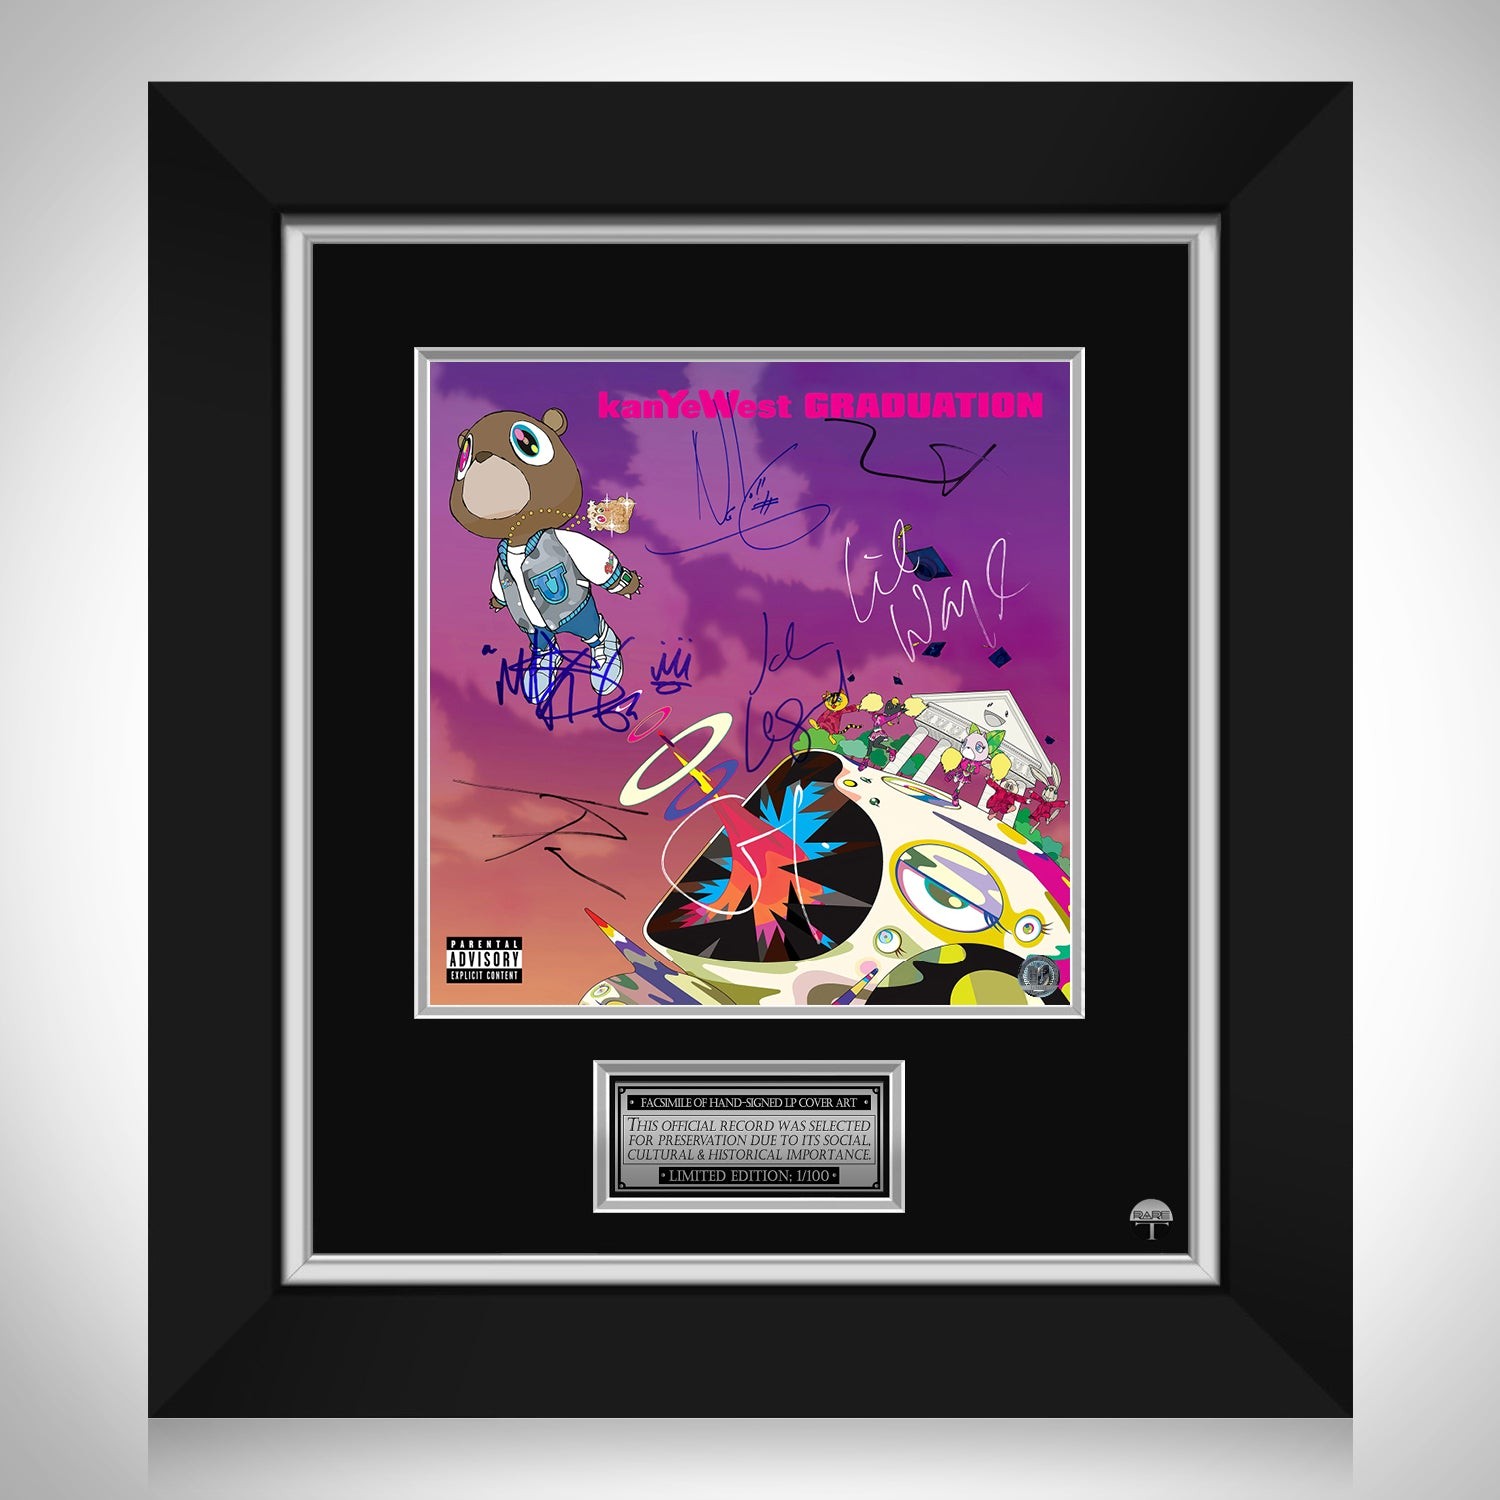 Kanye West - Graduation LP Cover Limited Signature Edition Custom Frame